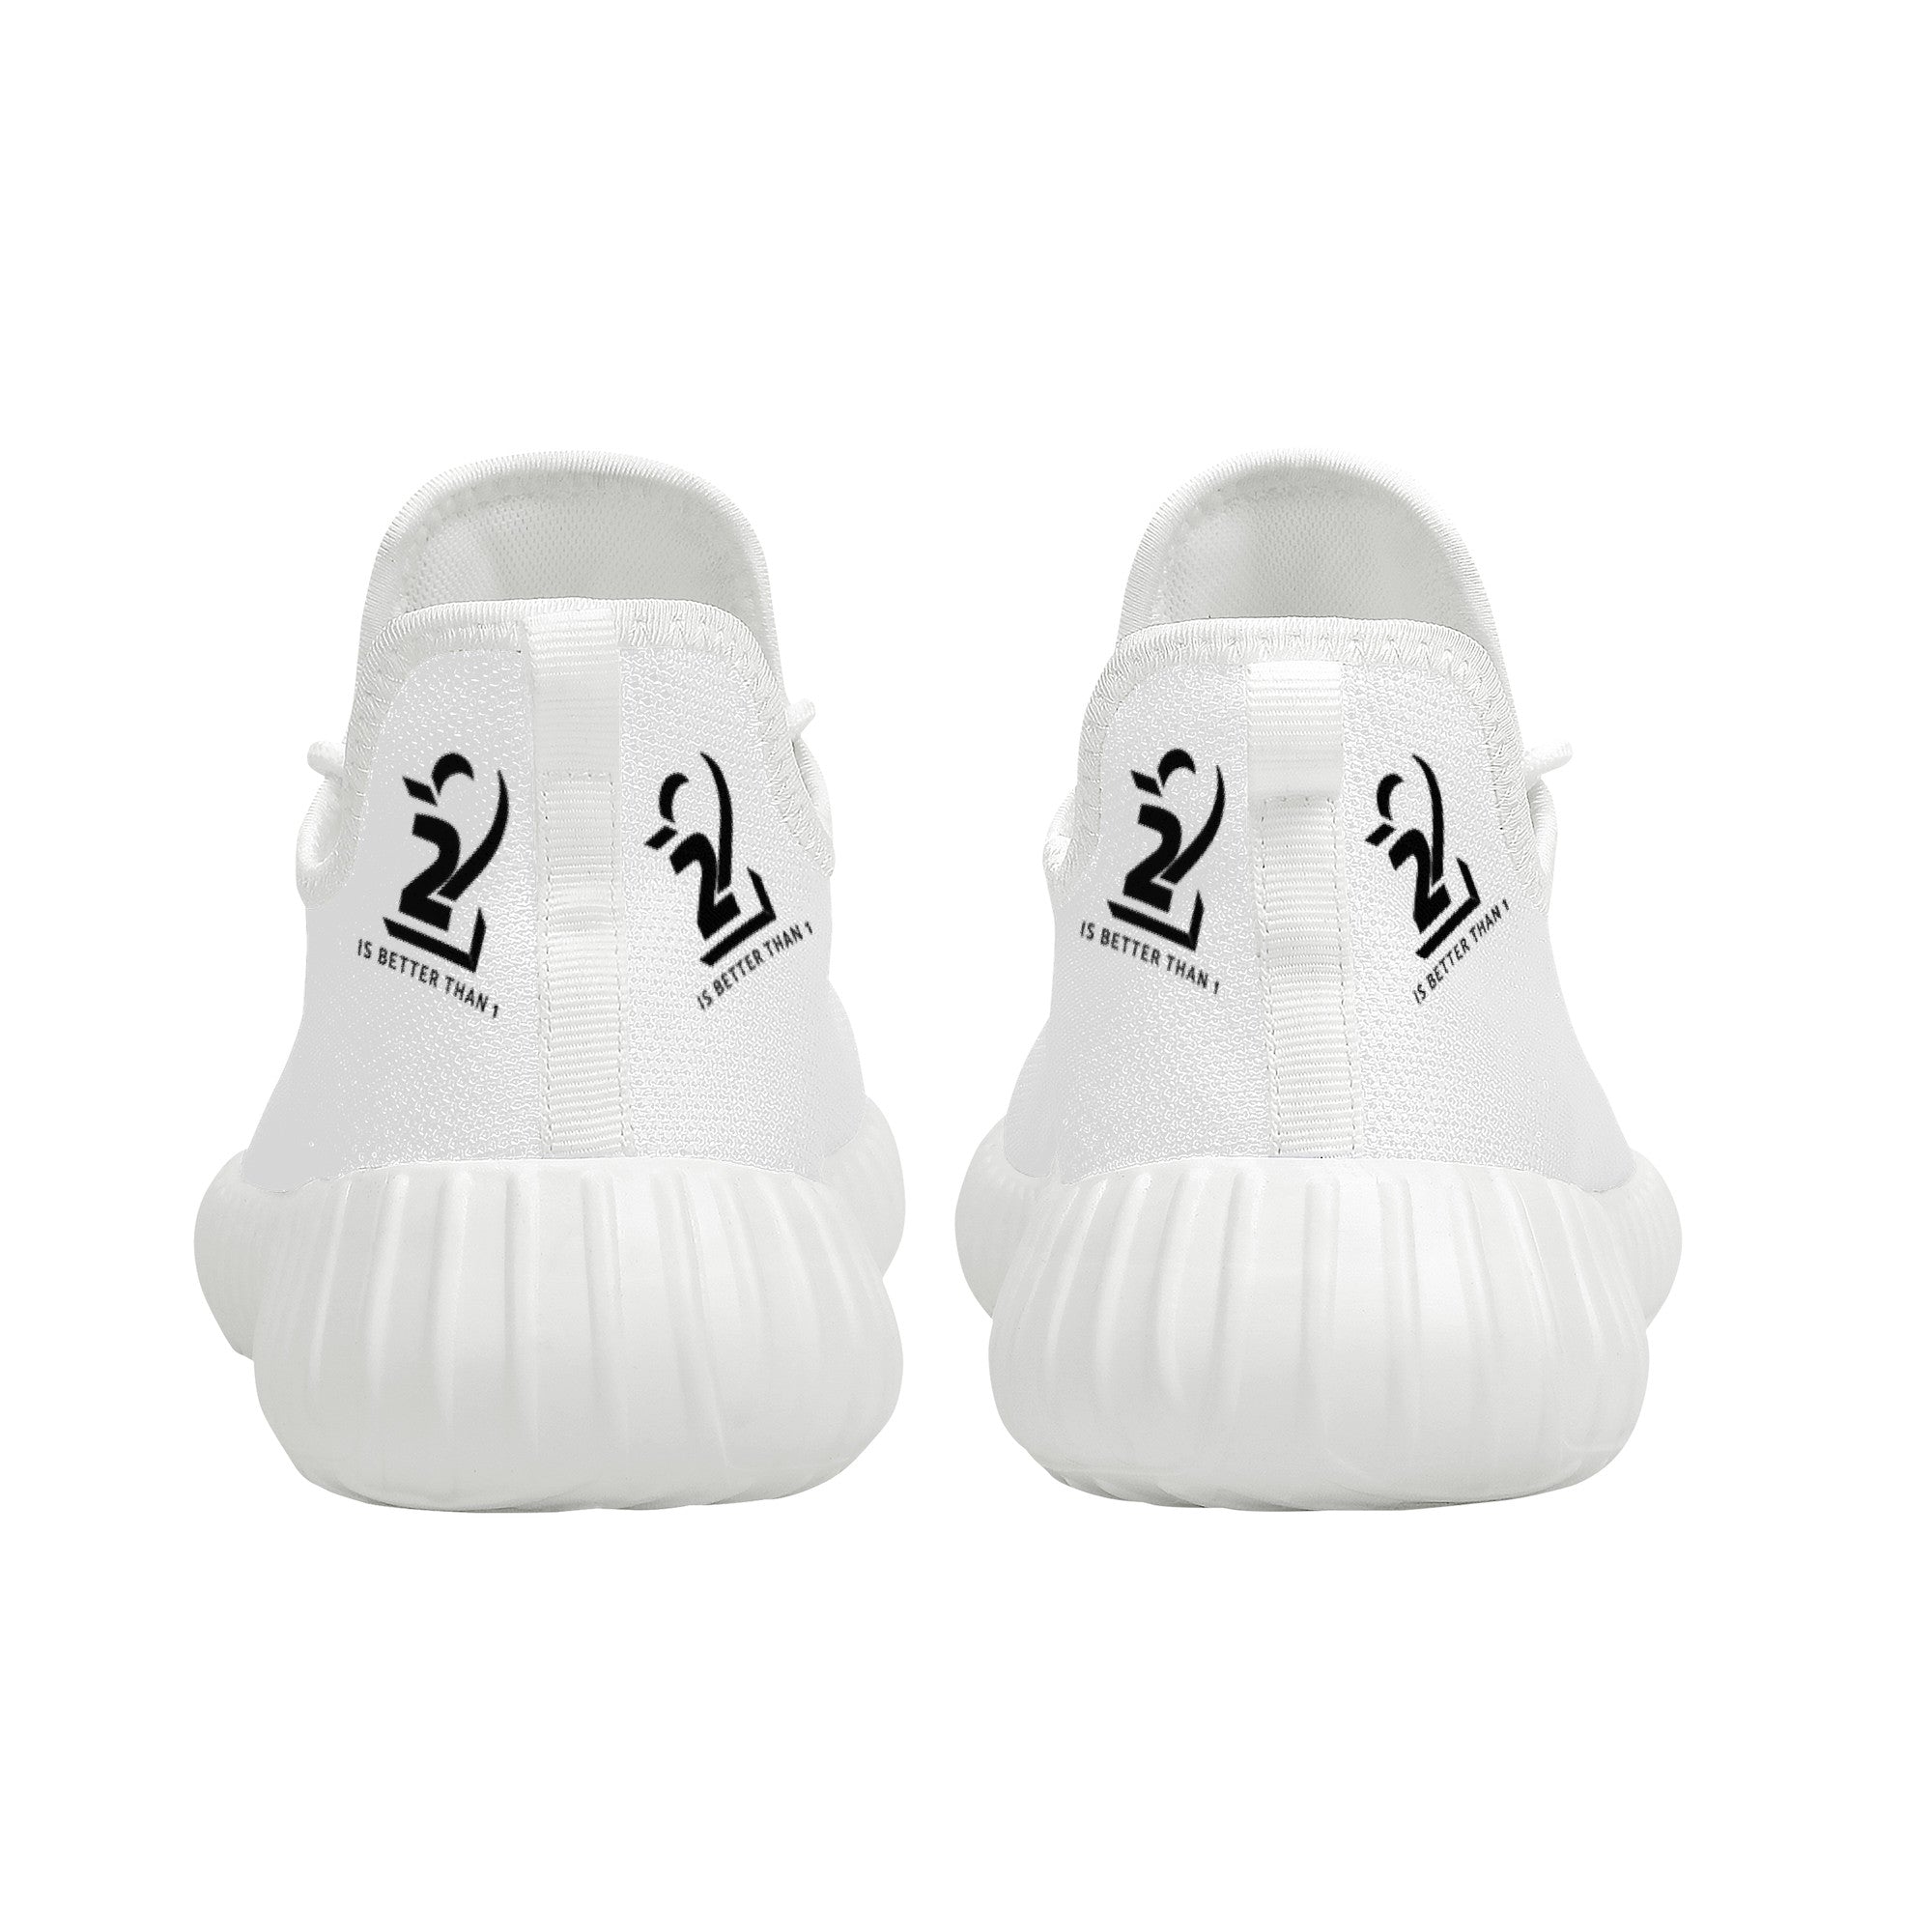 2 Times Sneakers | Low Top Customized | Shoe Zero